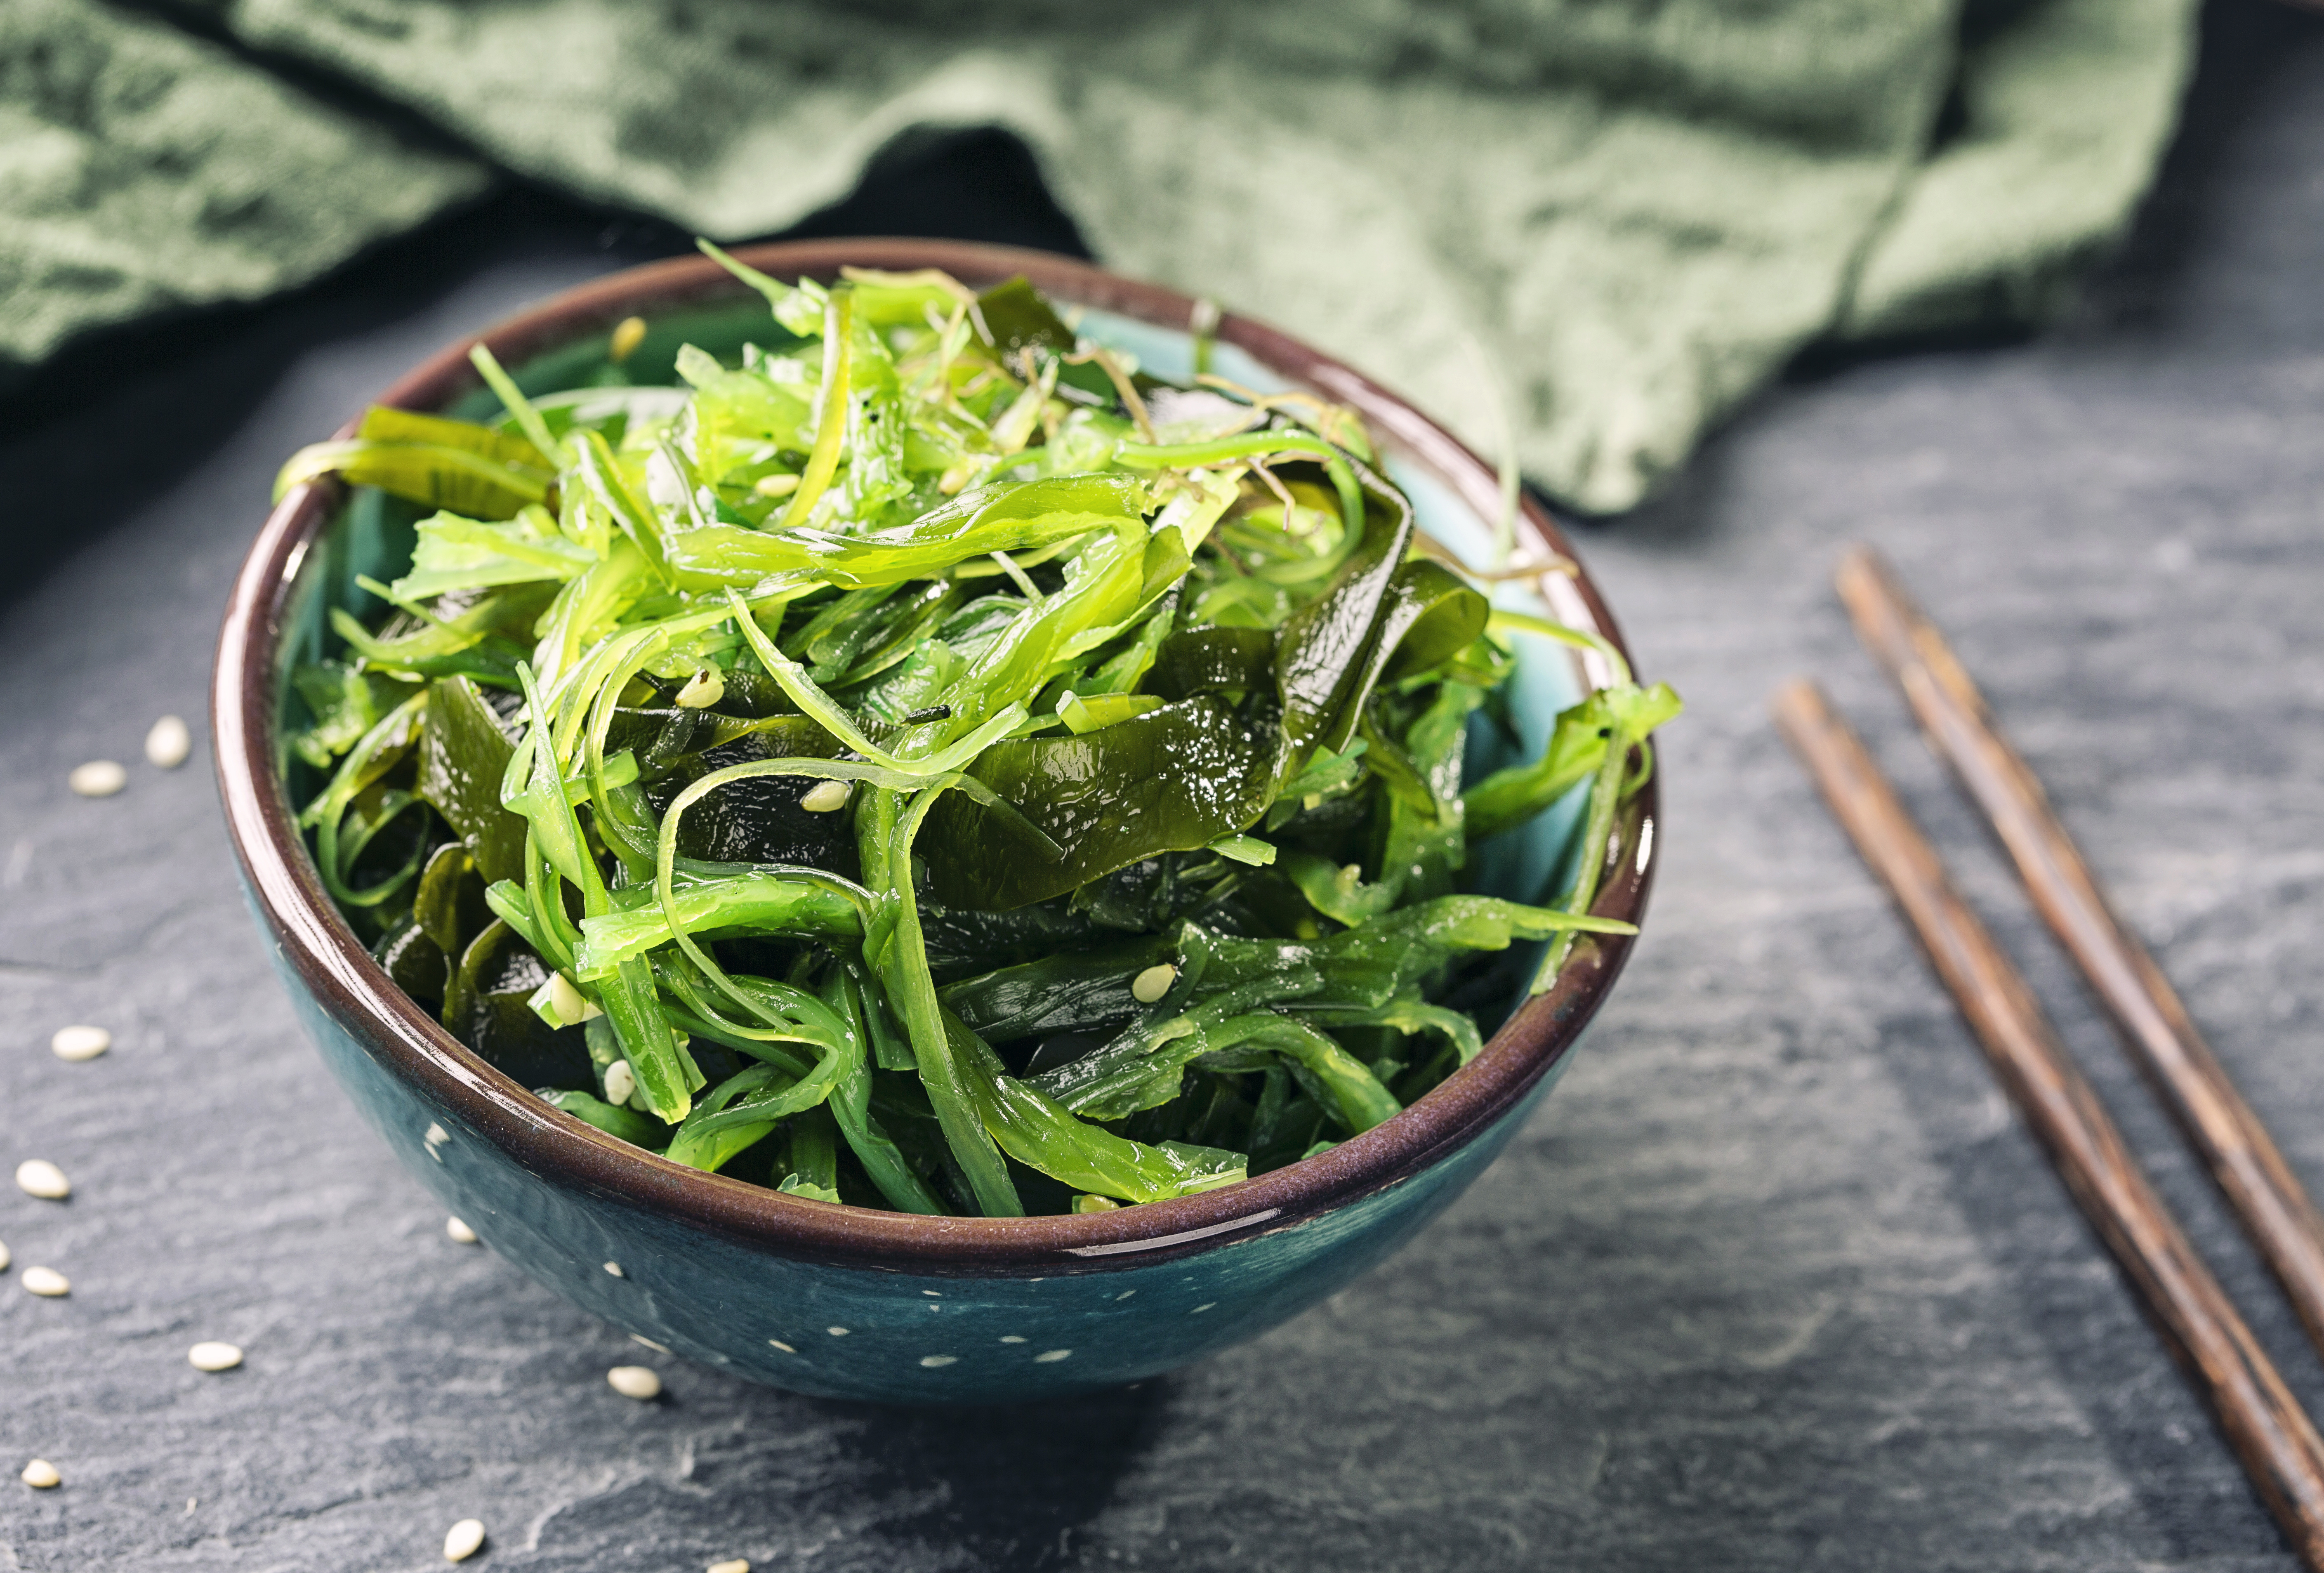 sea veggies - sea vegetables - seaweed - nutritional benefits - health benefits - kombu - wakame - recipe